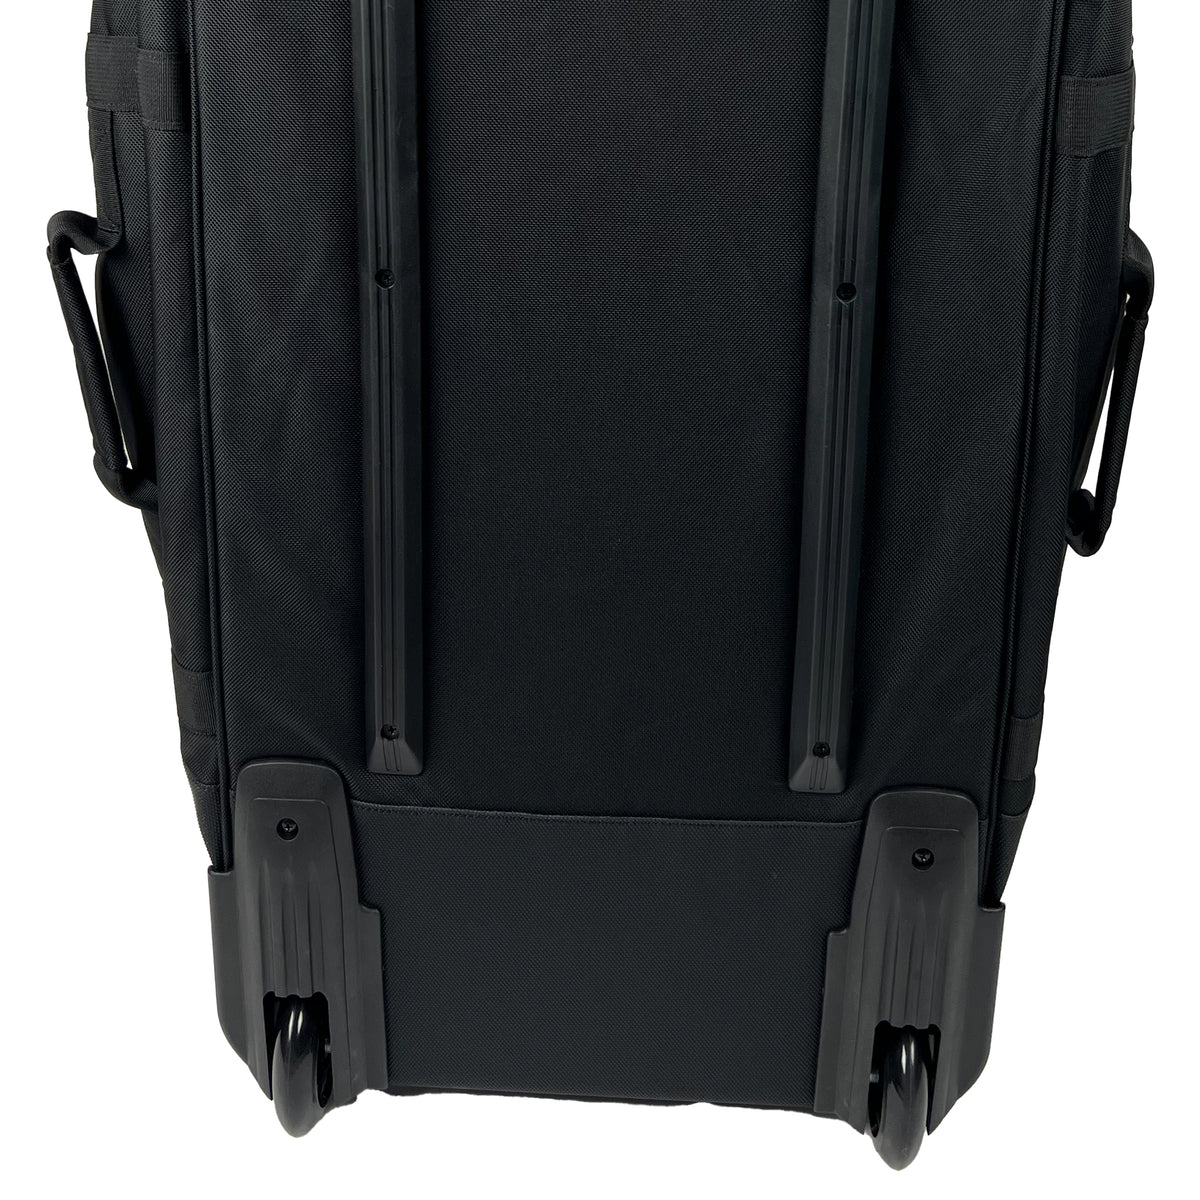 Wolfpack Gear™ Max Air Roller Bag